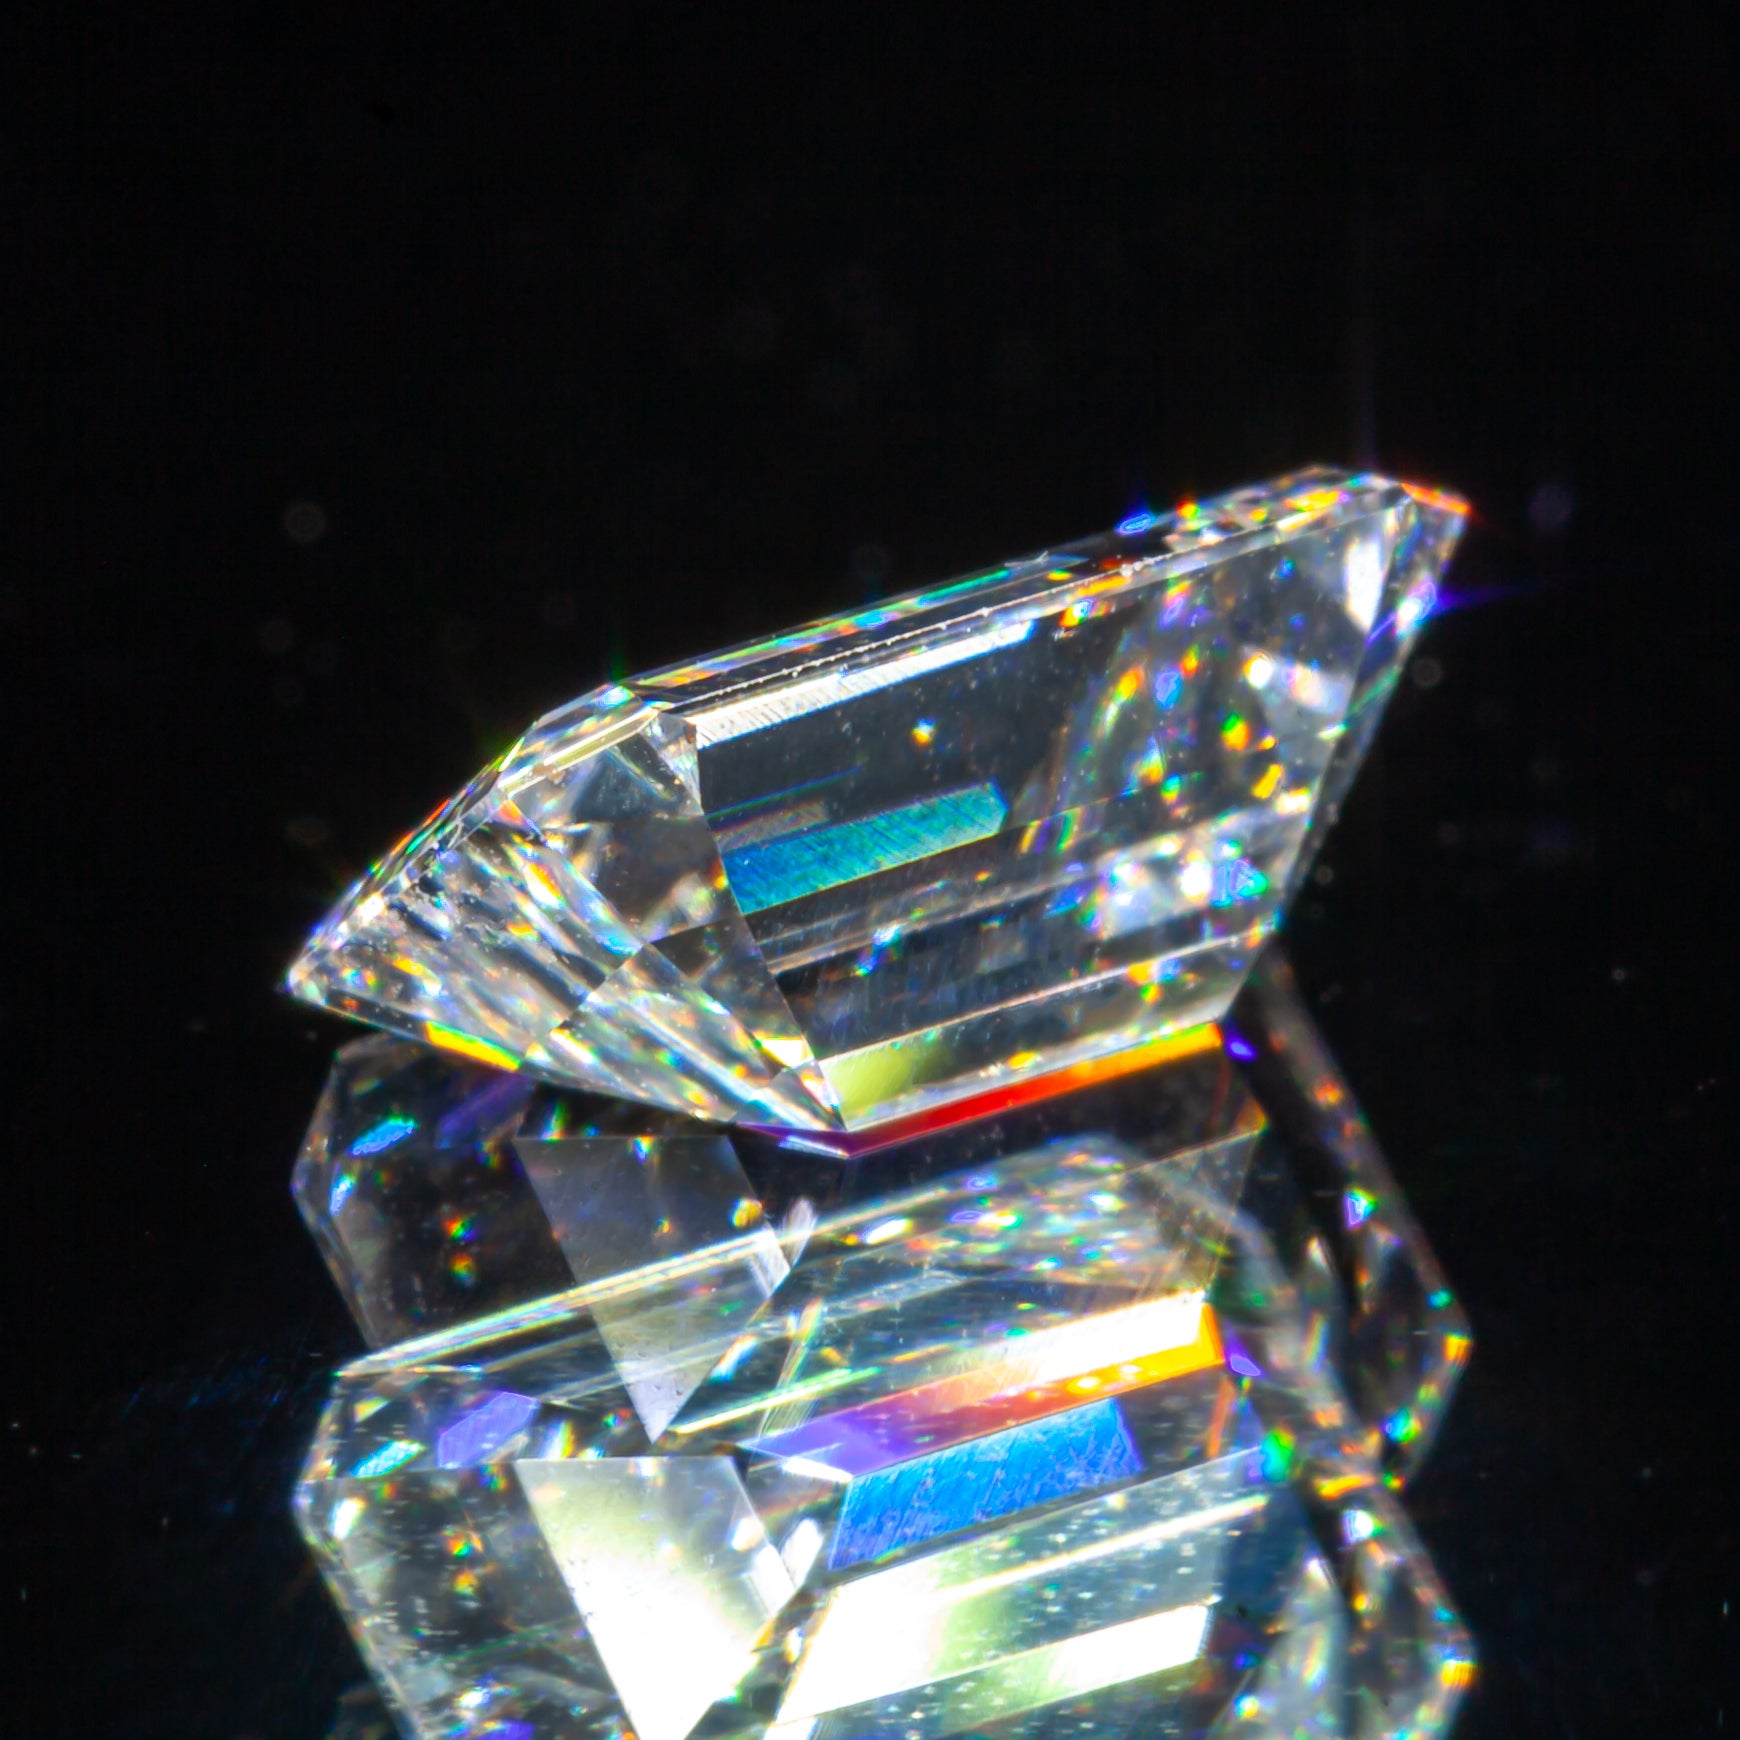 0.87 Carat Loose D / VS1 Emerald Cut Diamond GIA Certified

Diamond General Info
Diamond Cut: Emerald Cut
Measurements: 7.43  x  4.81  -  2.82

Diamond Grading Results
Carat Weight: 0.87
Color Grade: D
Clarity Grade: VS1

Additional Grading